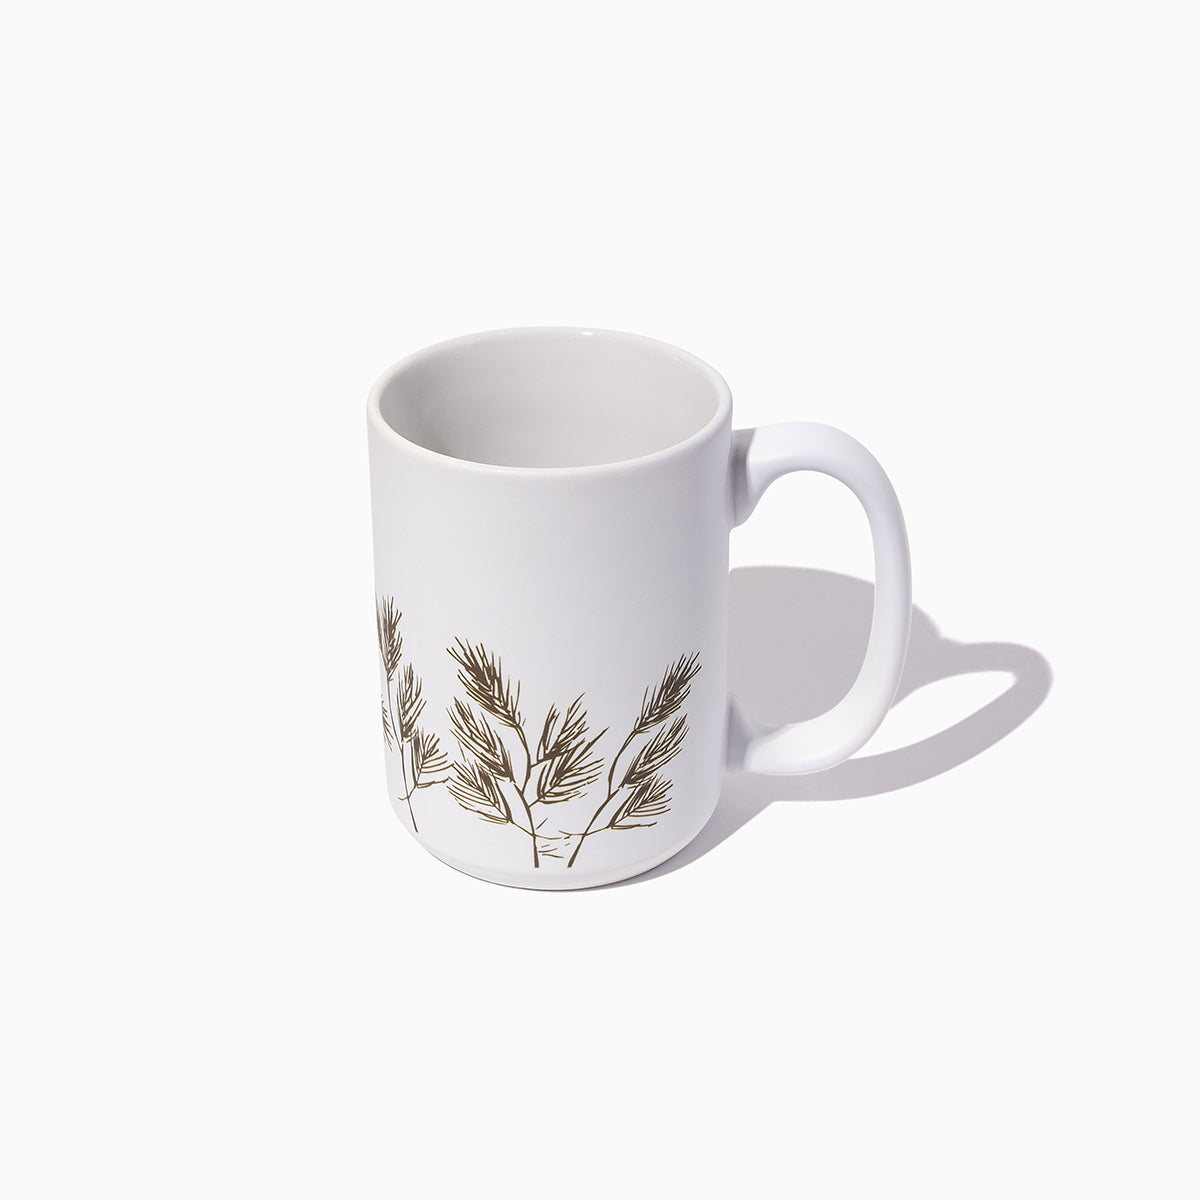 Winter Pine Ceramic Mug | Product Detail Image | Uncommon James Home